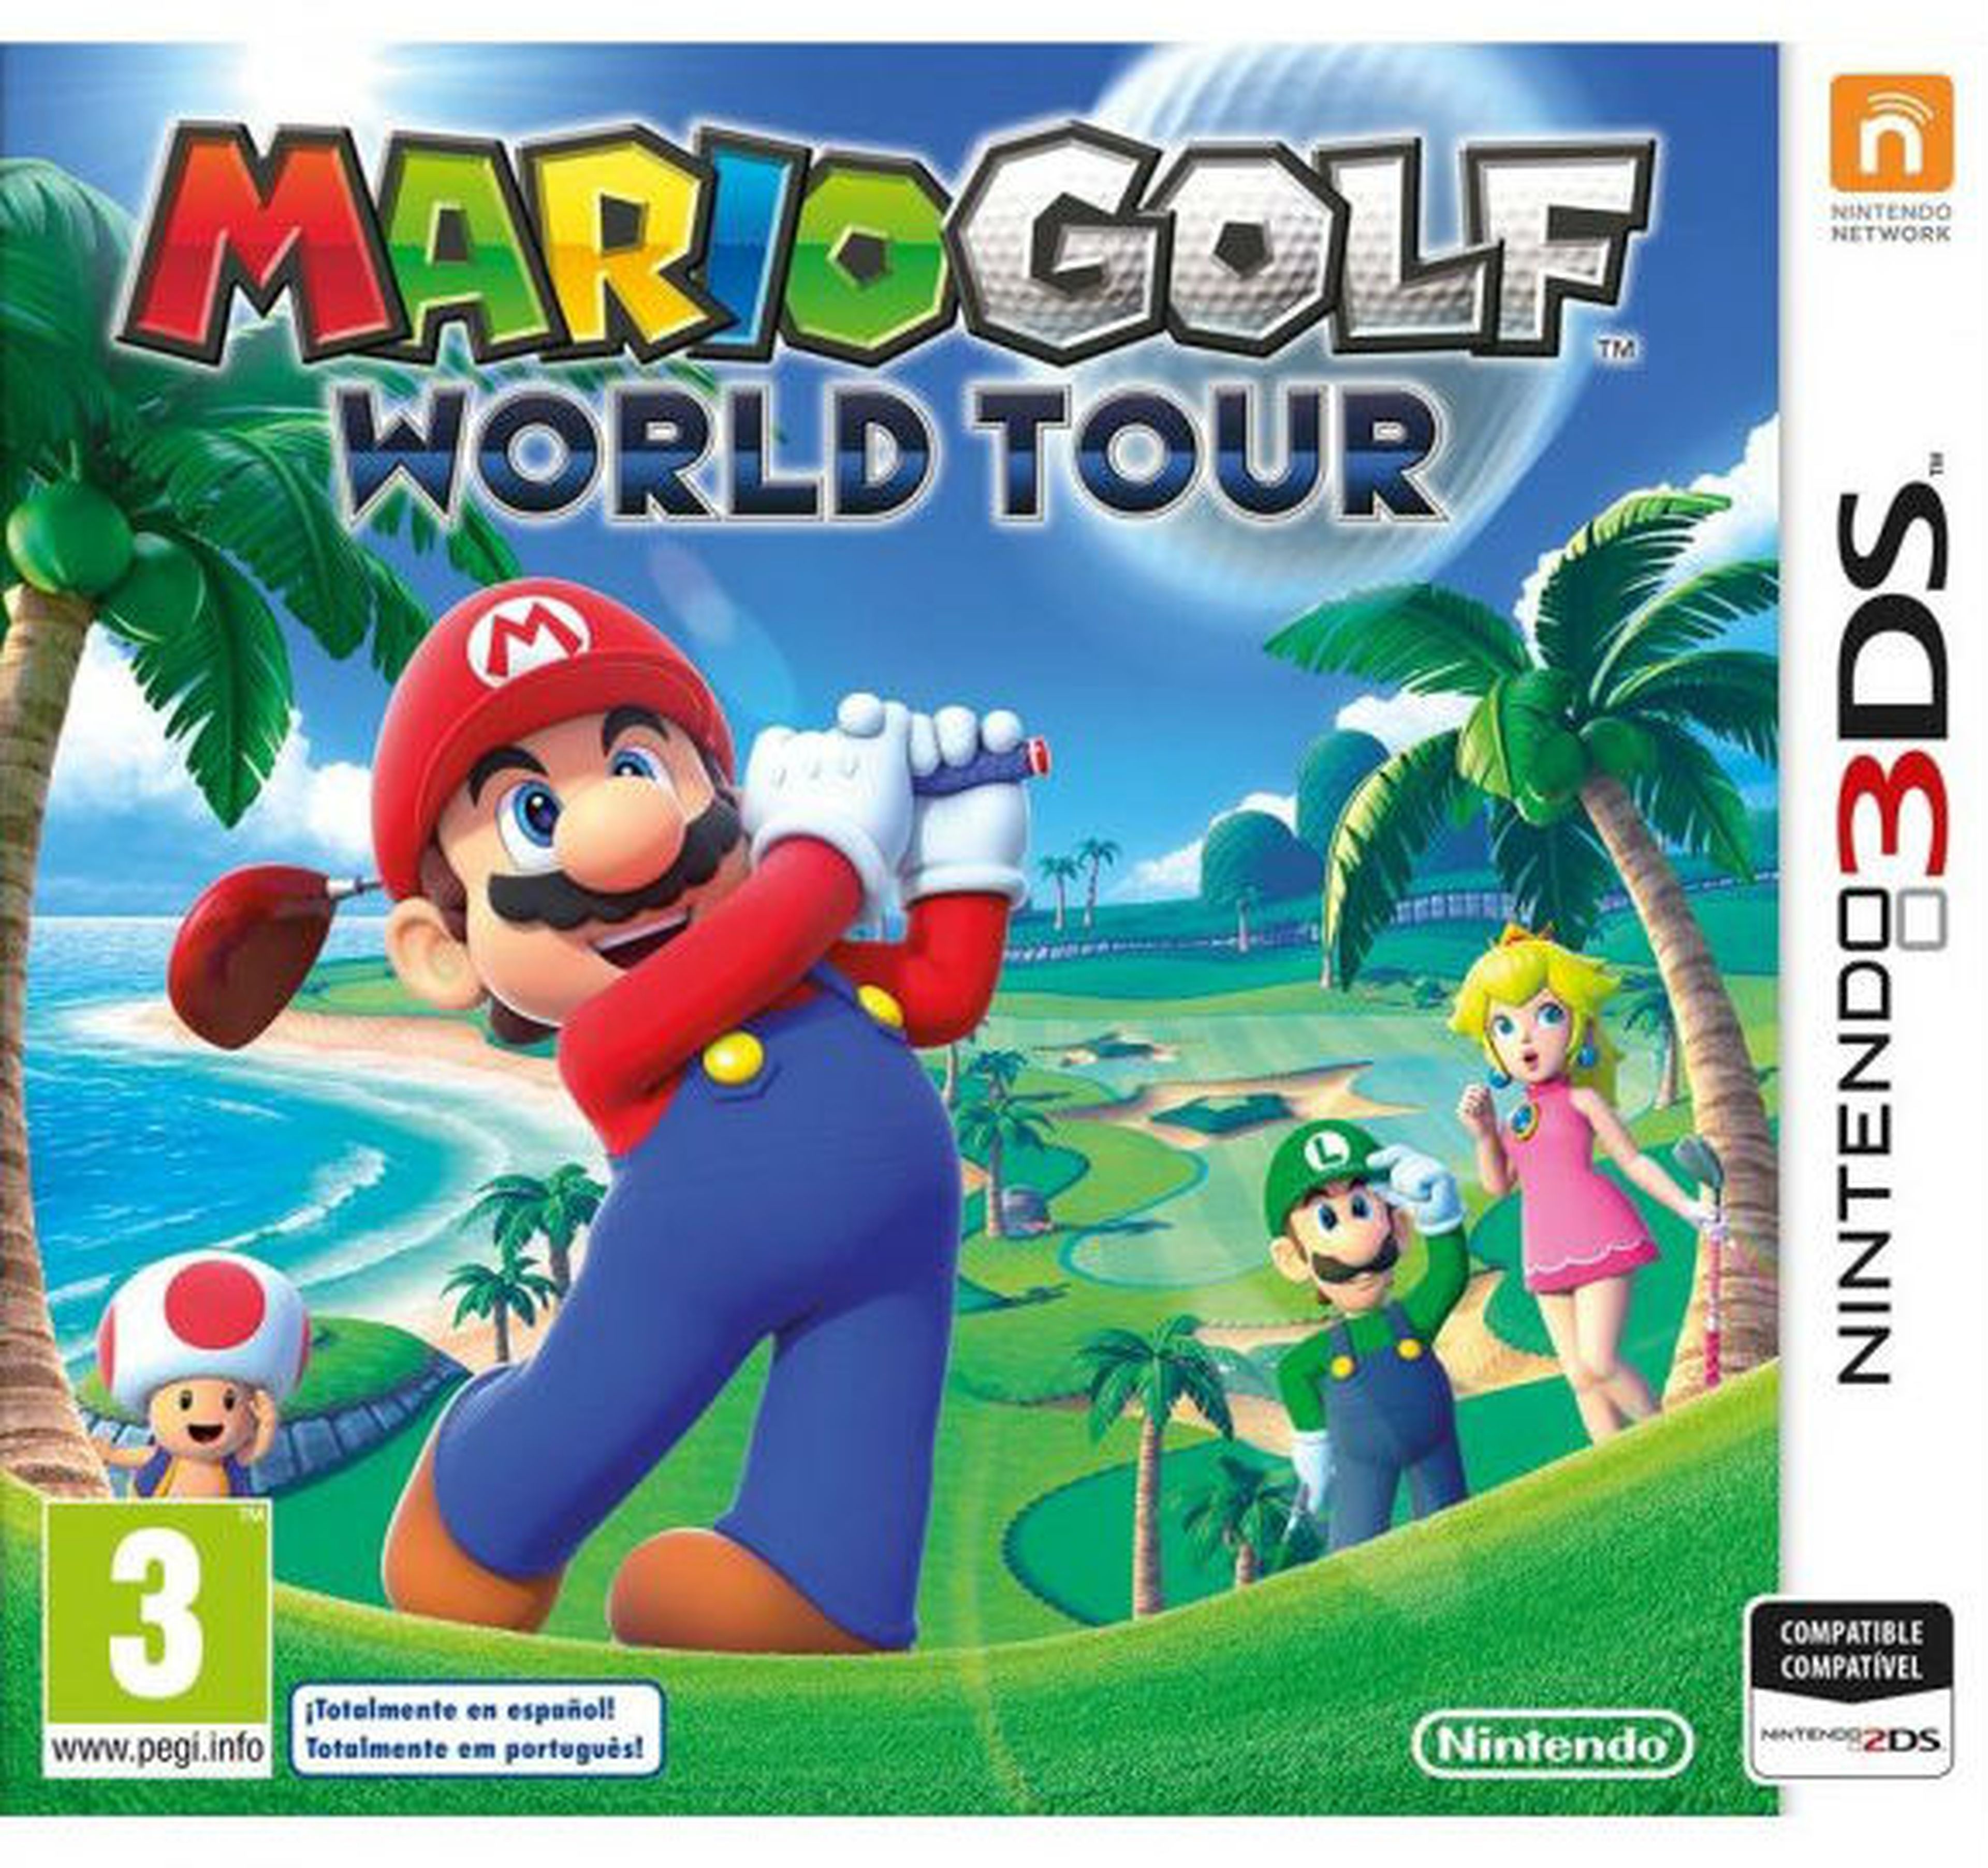 Así es la carátula de Mario Golf: World Tour